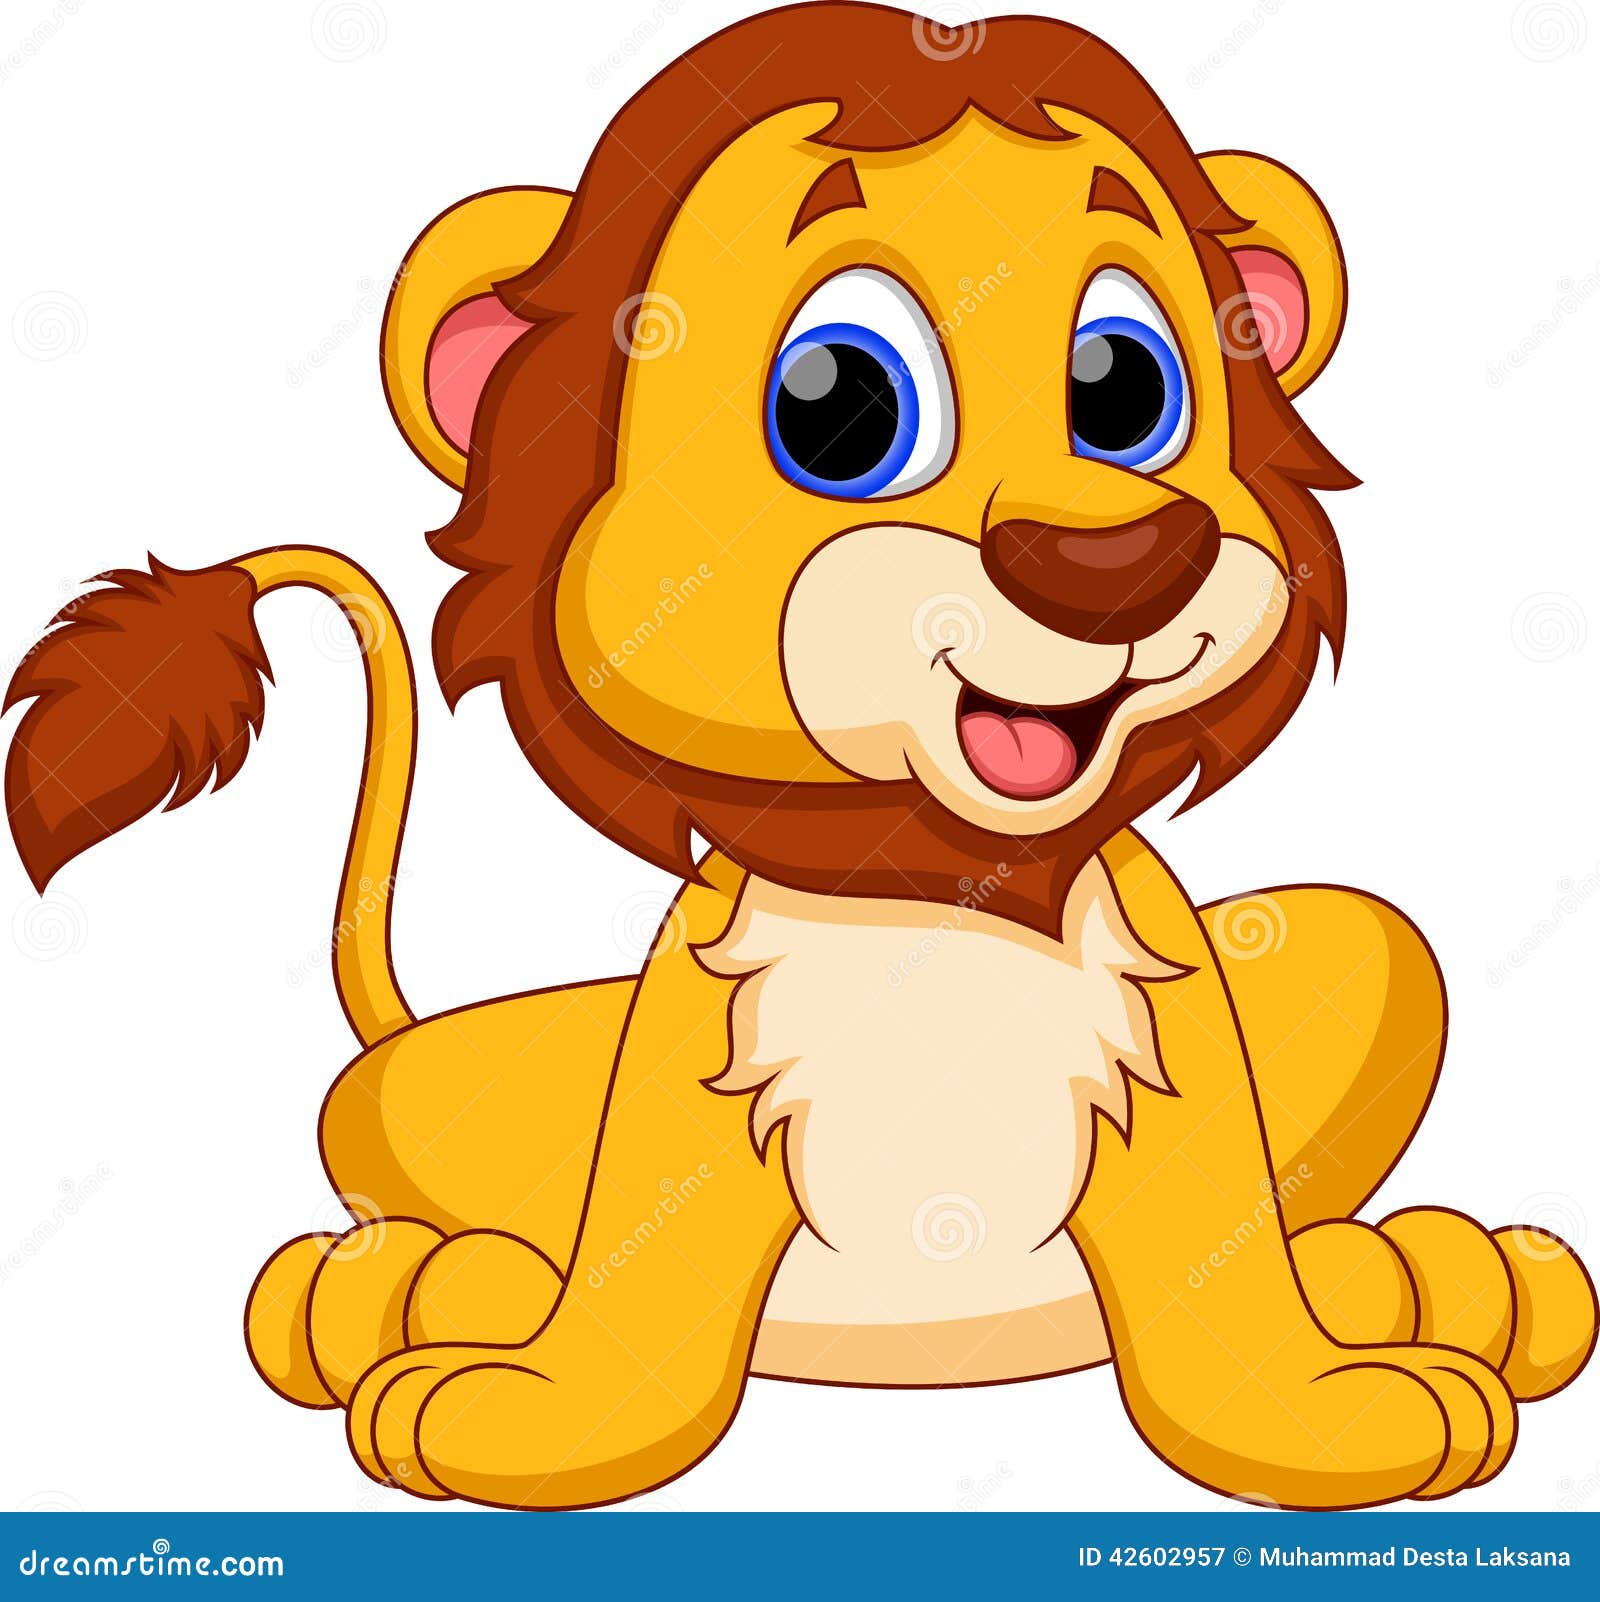 Lion cartoon stock illustration. Illustration of cute - 42602957